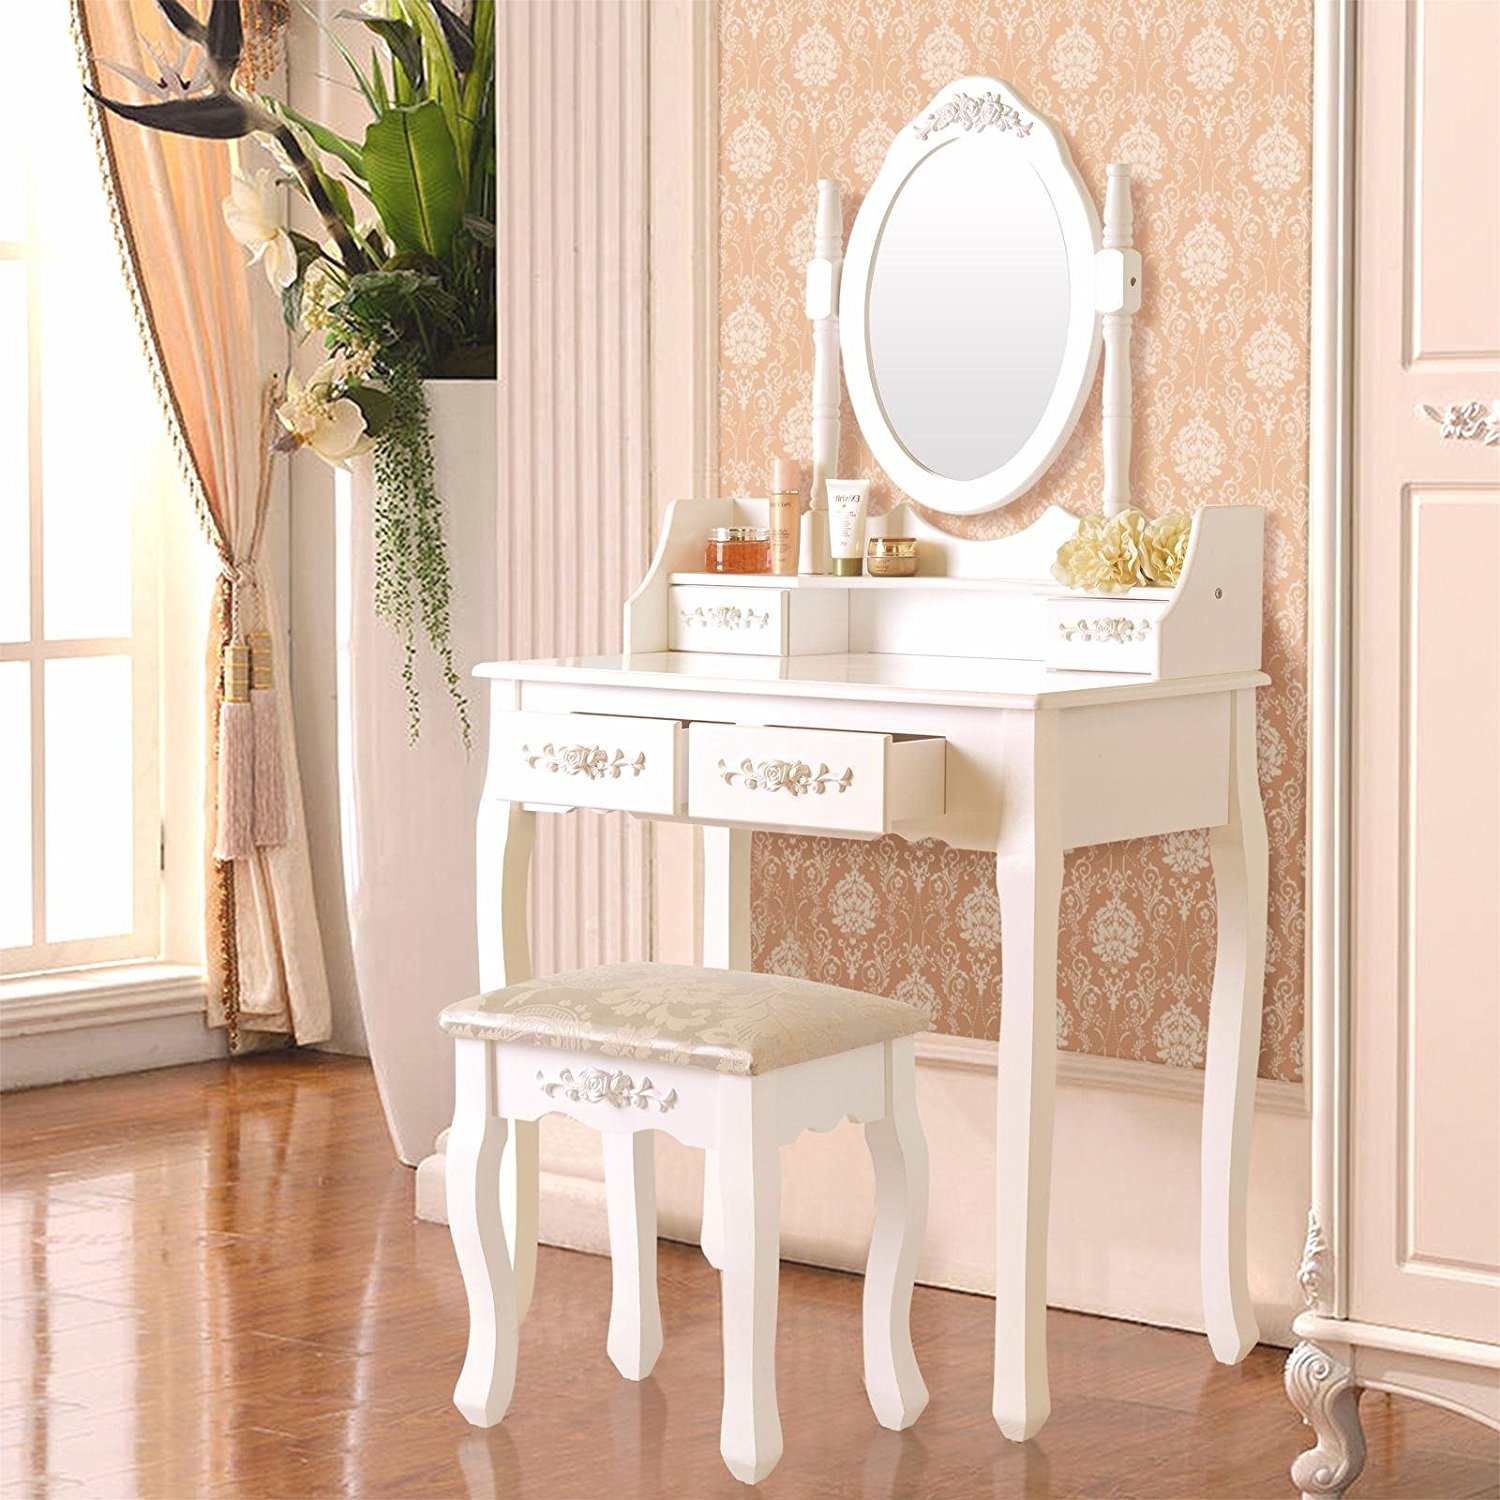 Winado Vanity Set Makeup Desk Dressing Table Set with Stool 4 Drawer & Oval Mirror in Bedroom, White